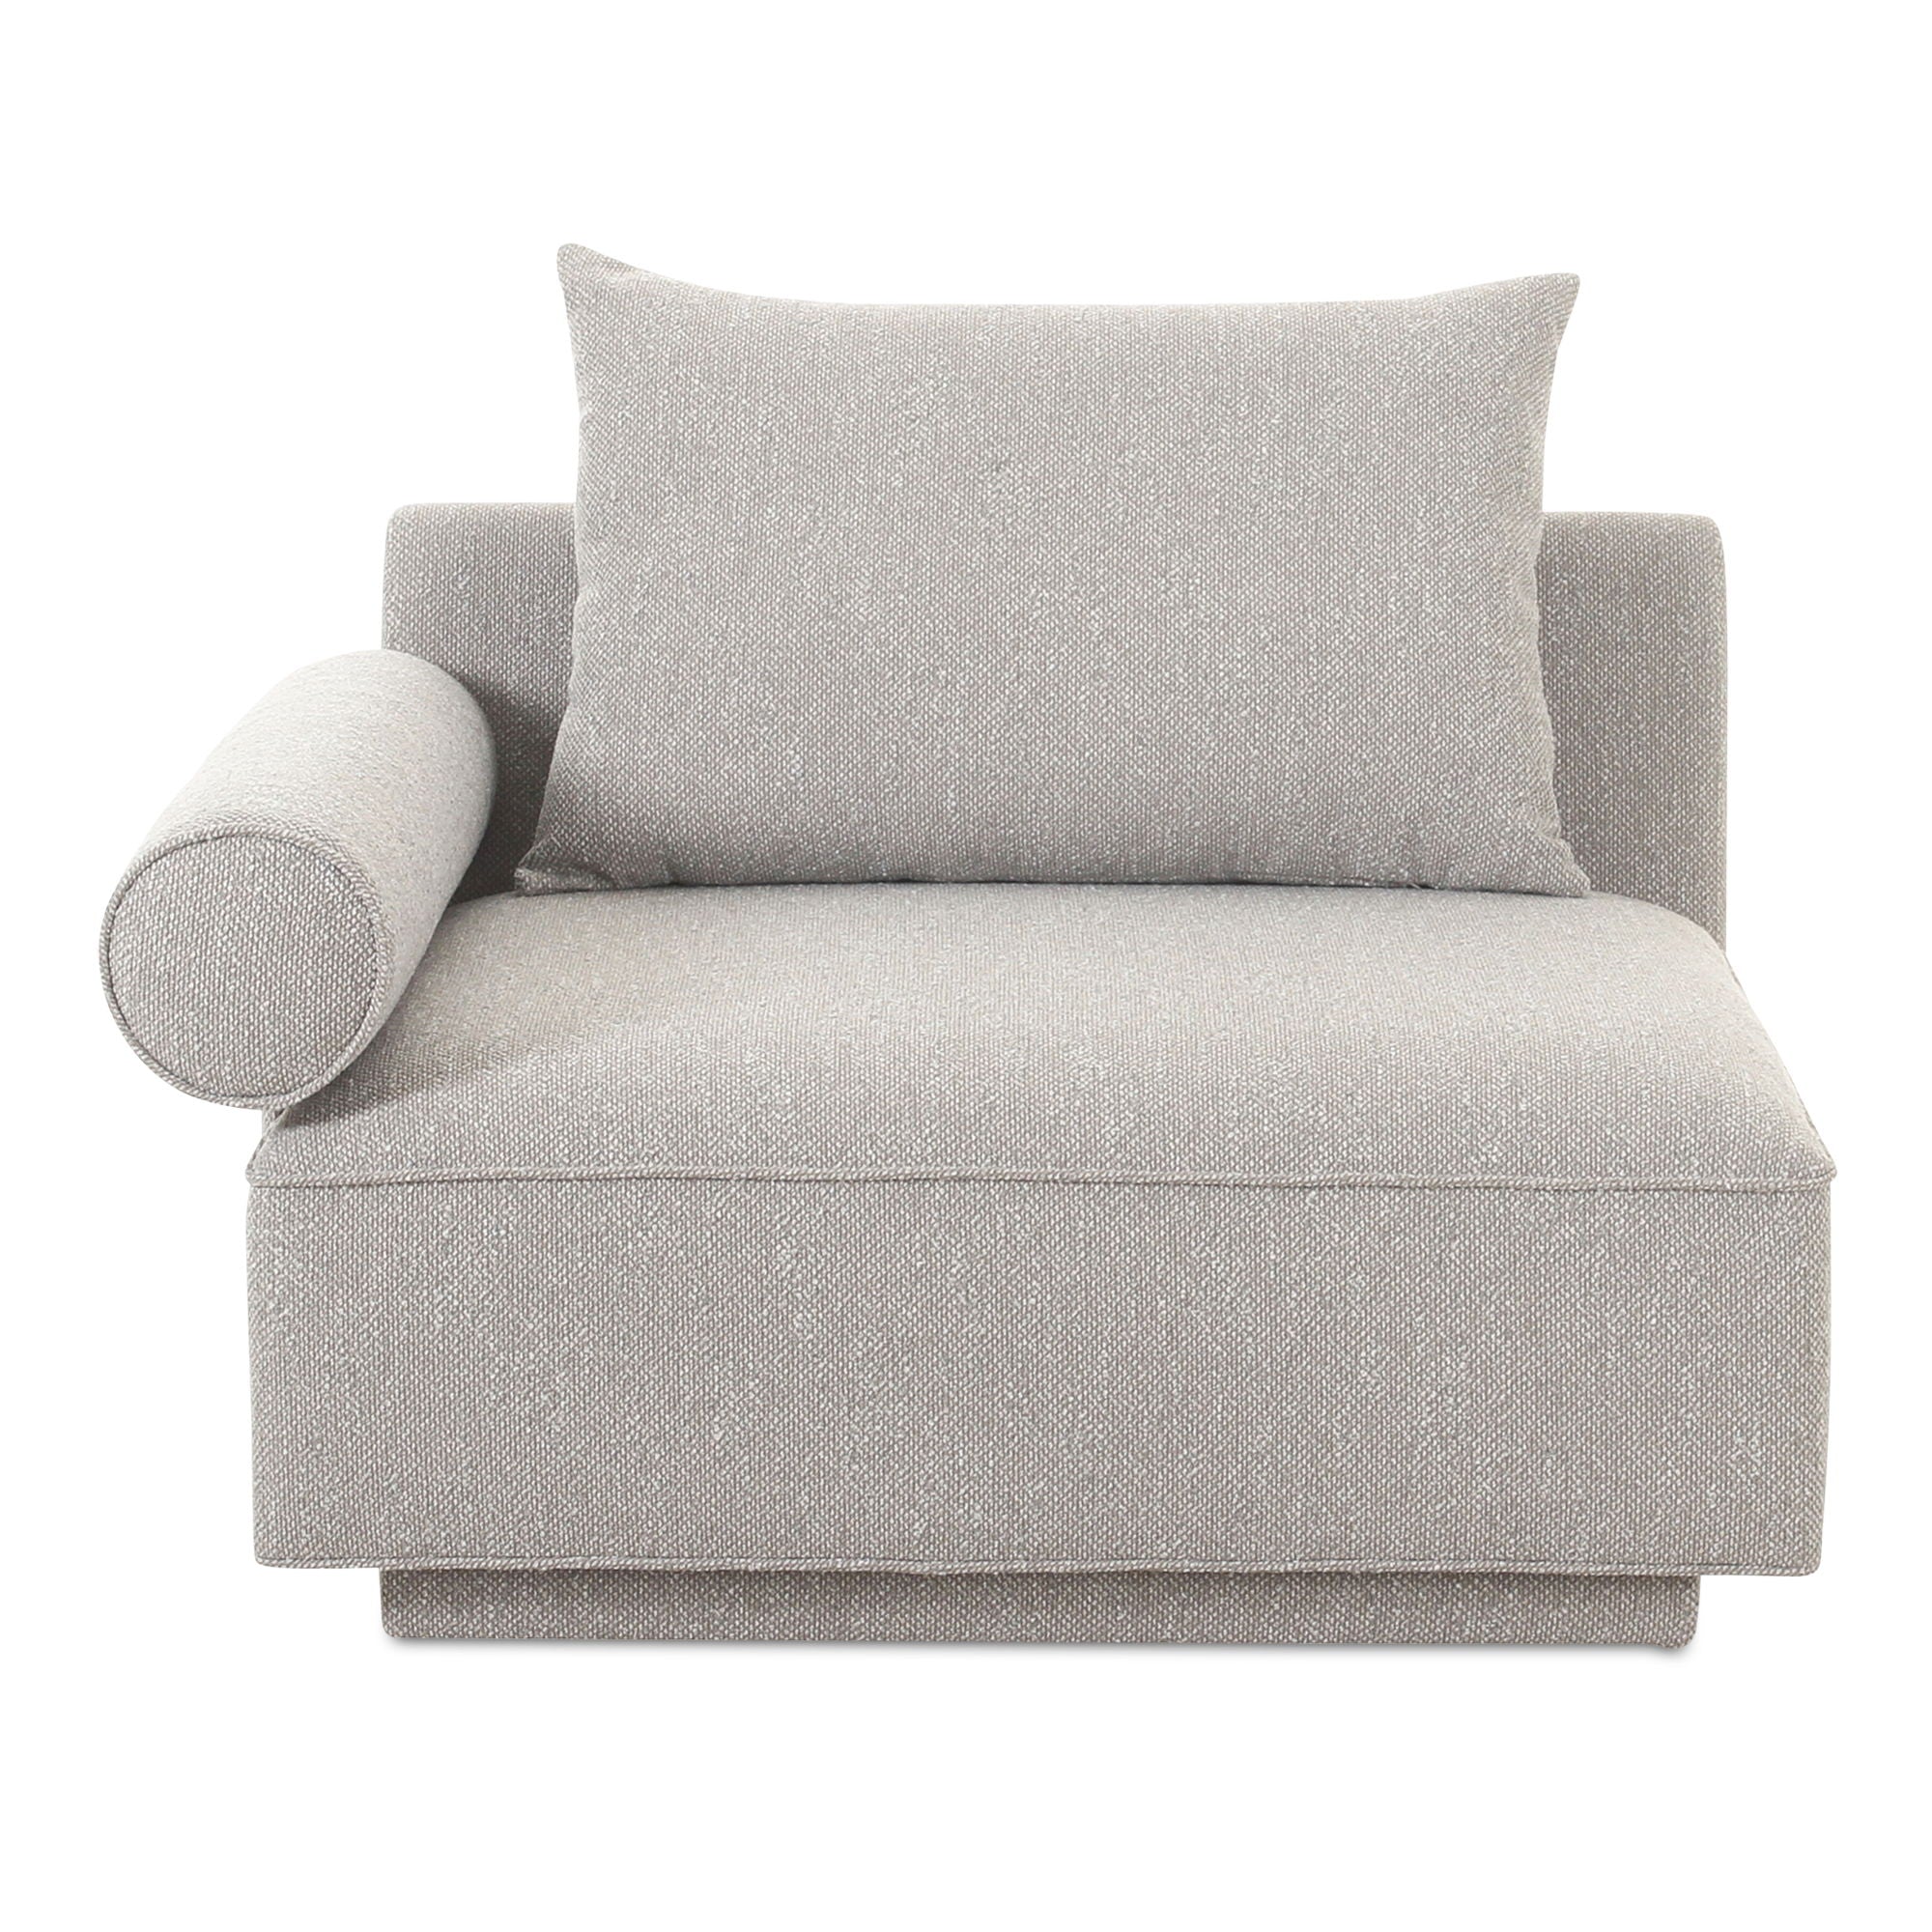 Rosello - Left Arm Facing Chair - Light Grey